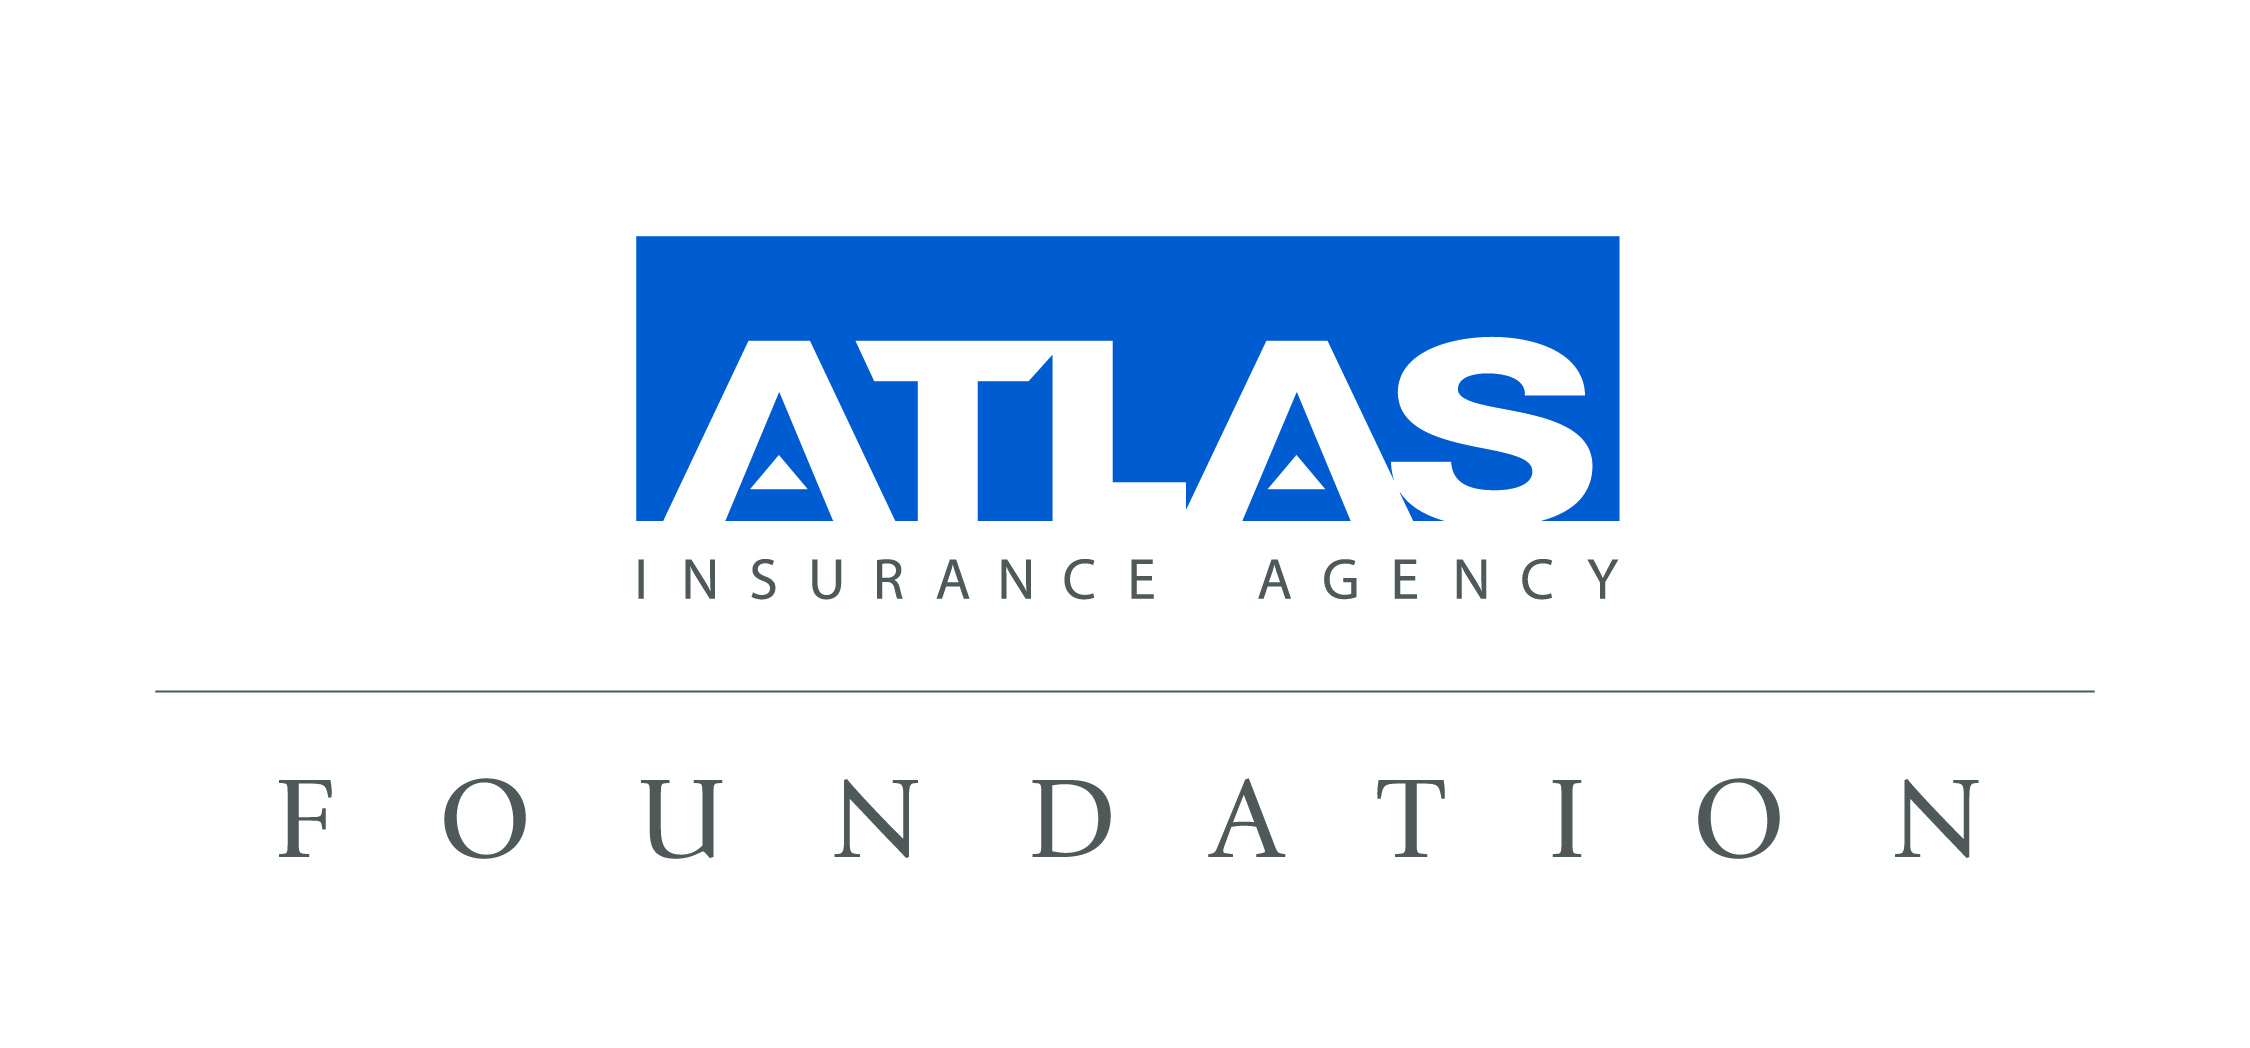 Atlas Insurance Agency Foundation